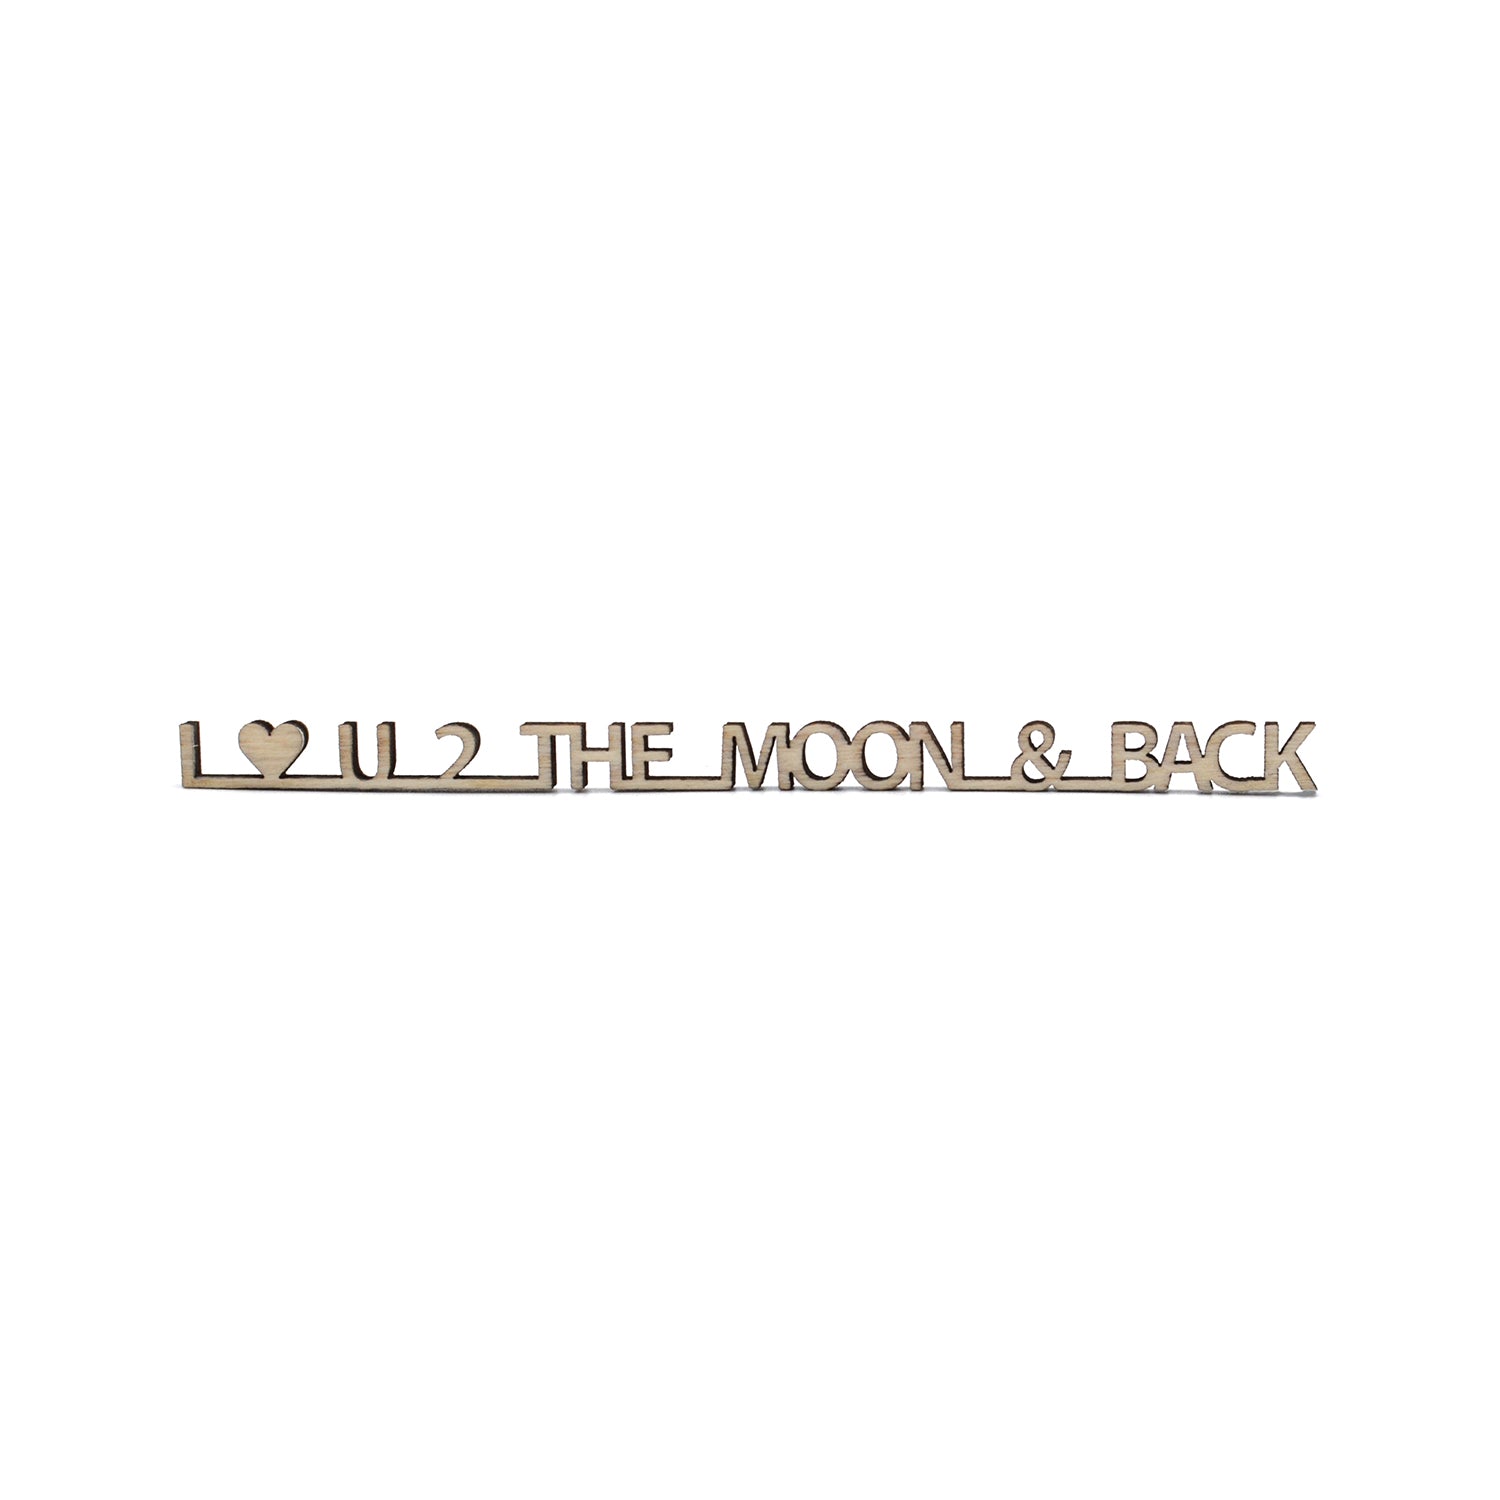 I ♥ u 2 the moon & back